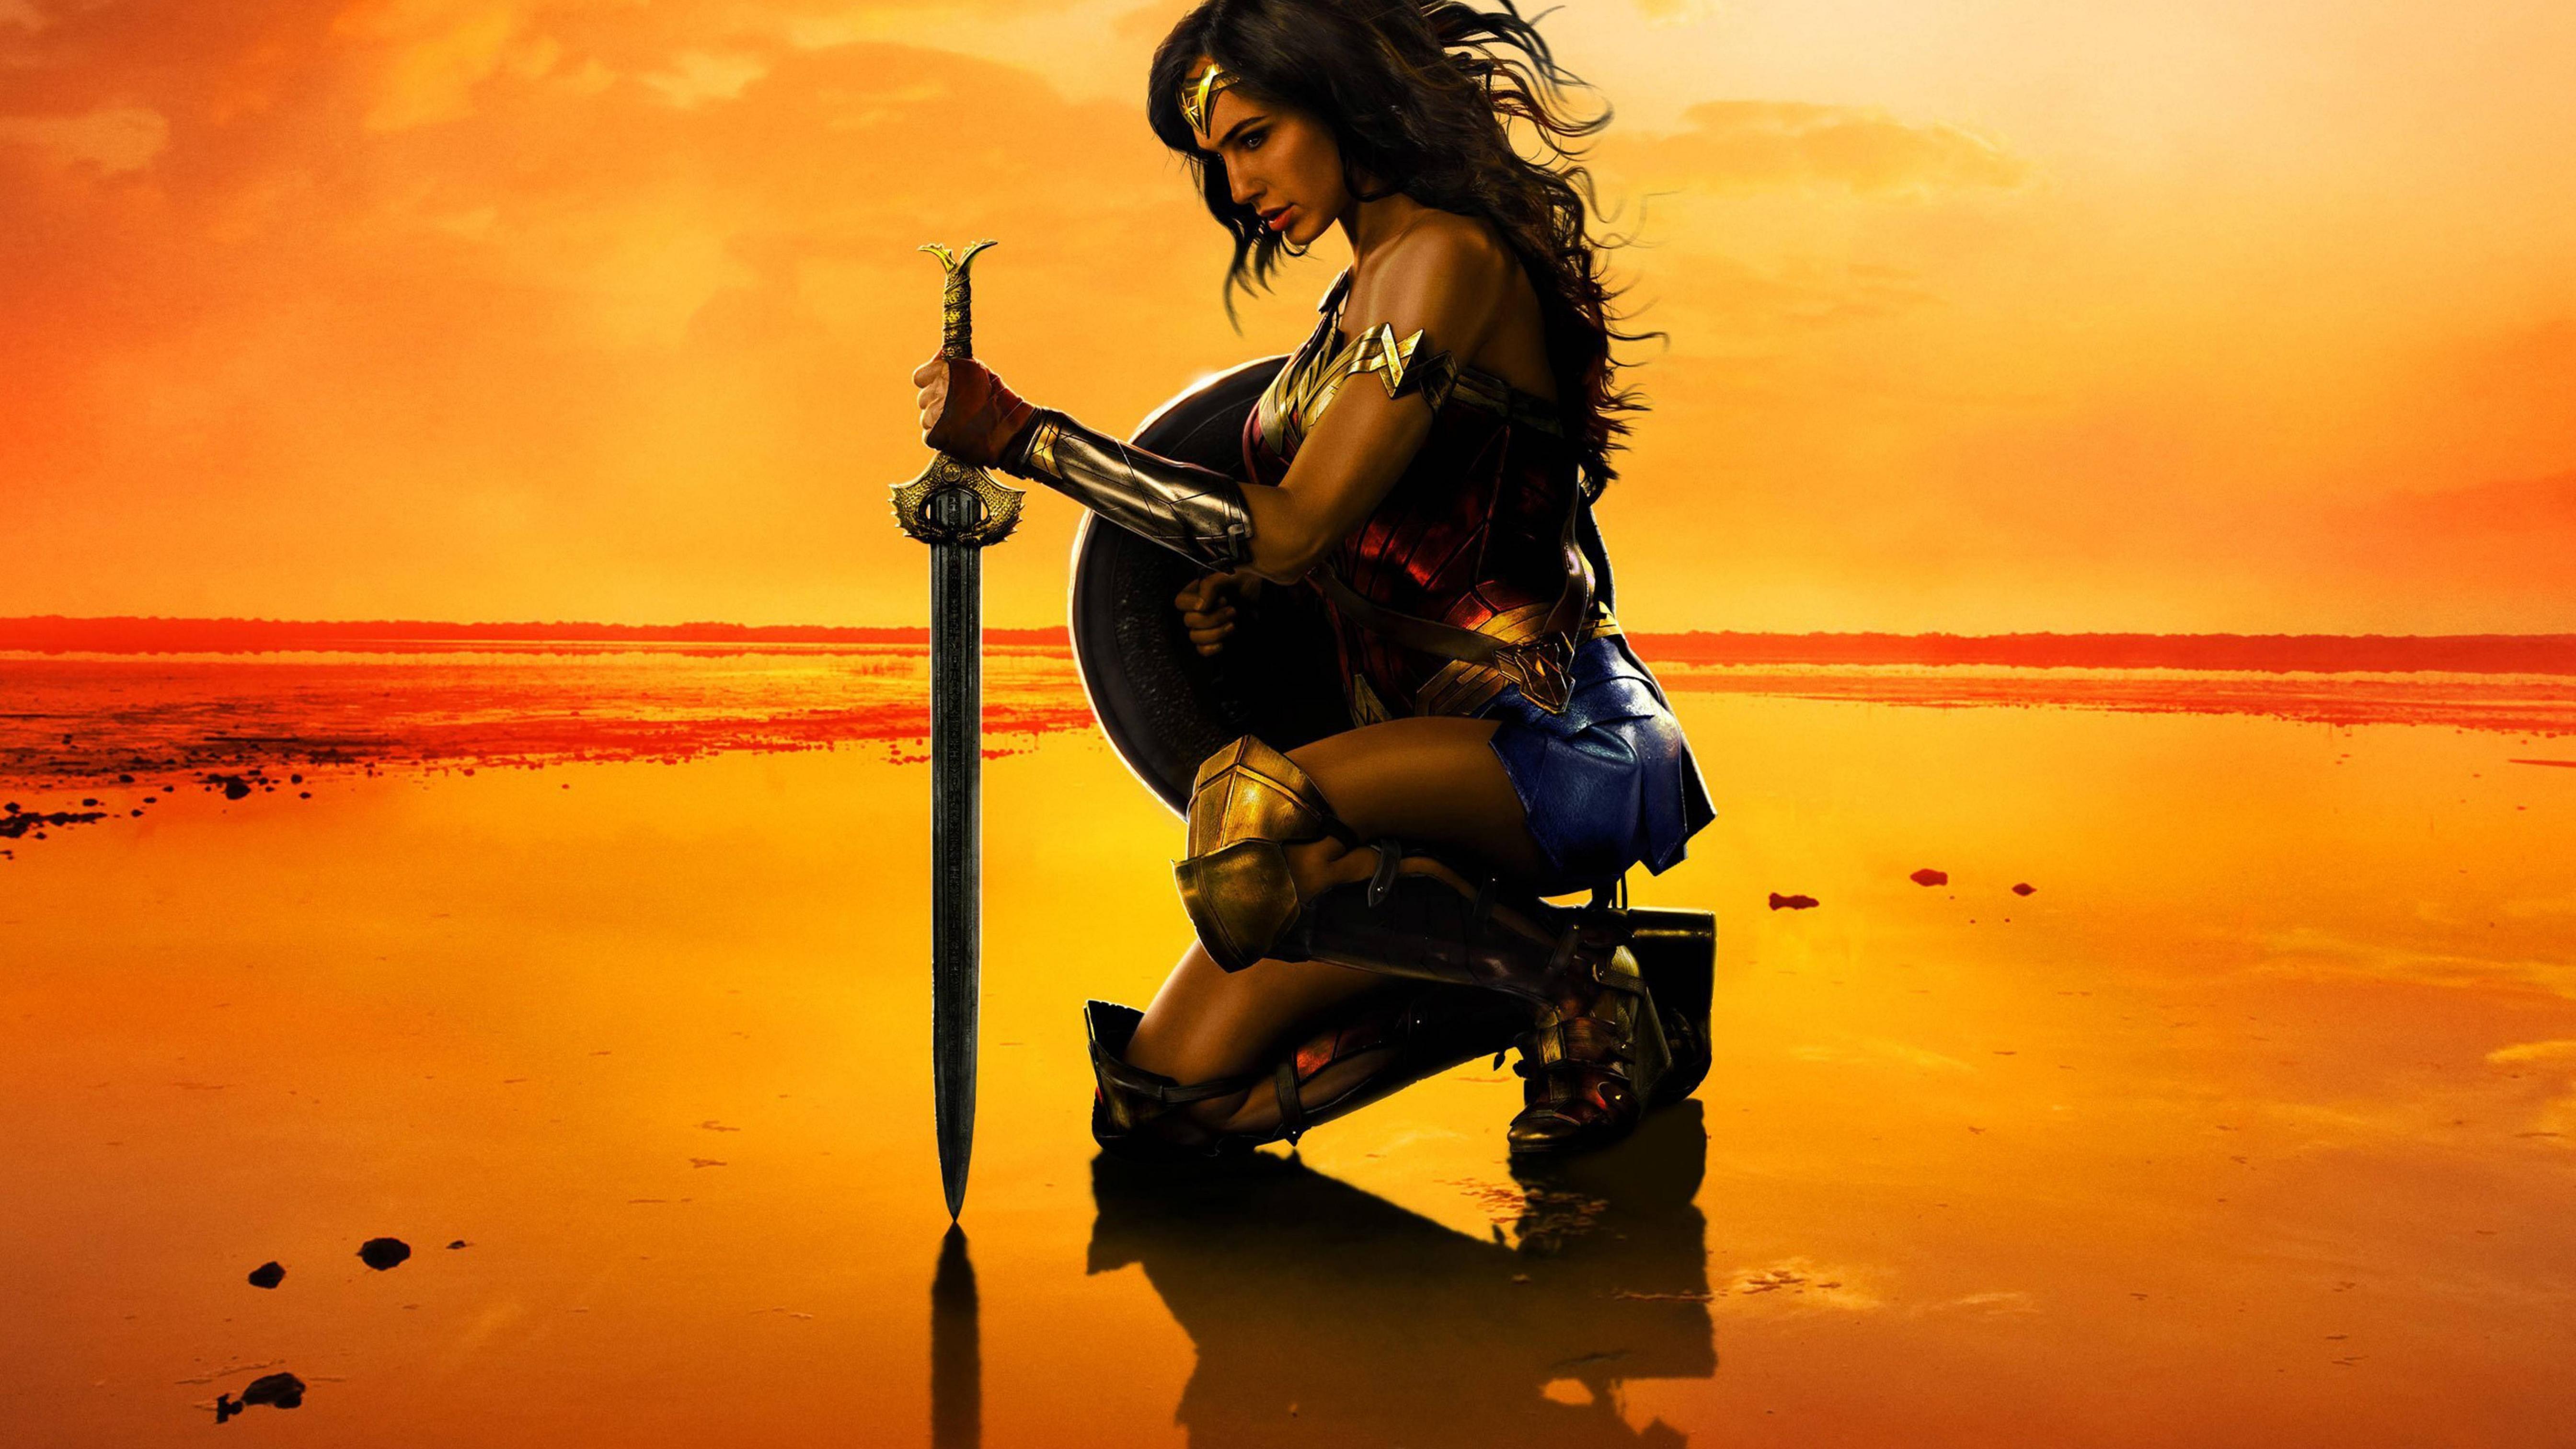 Wonder Woman 8k Wallpapers Top Free Wonder Woman 8k Backgrounds Wallpaperaccess 6372